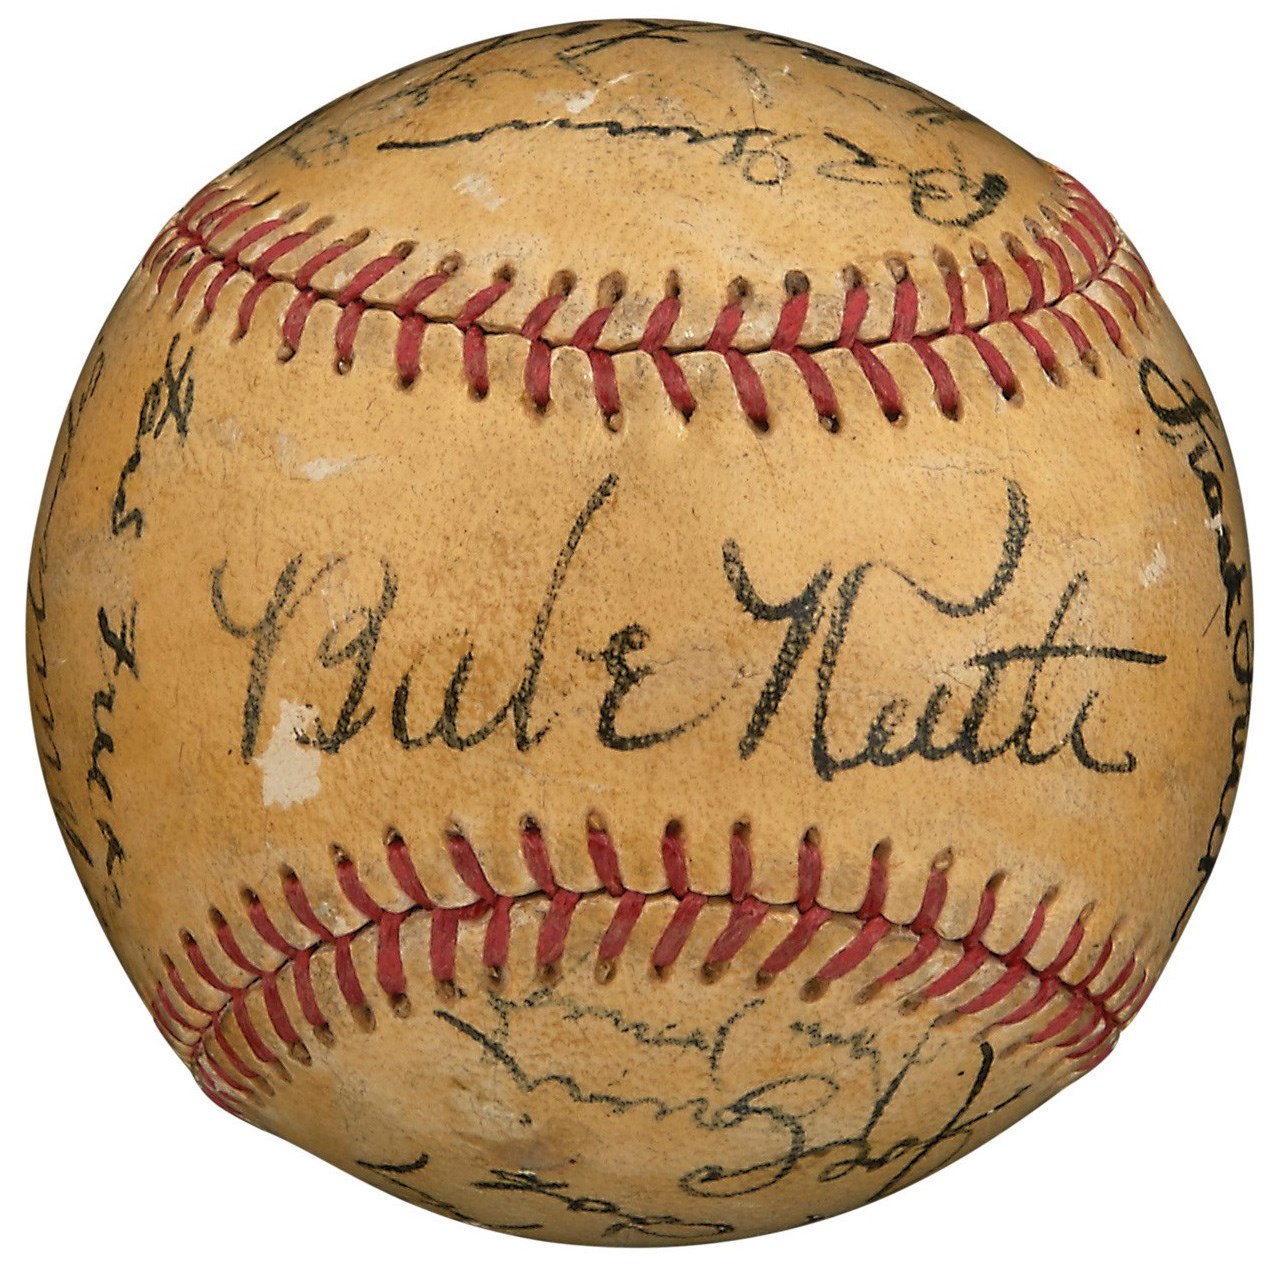 Baseball Autographs - 1938 Babe Ruth and Hall of Famers Signed Baseball at NYC Press Club Dinner (PSA & JSA)